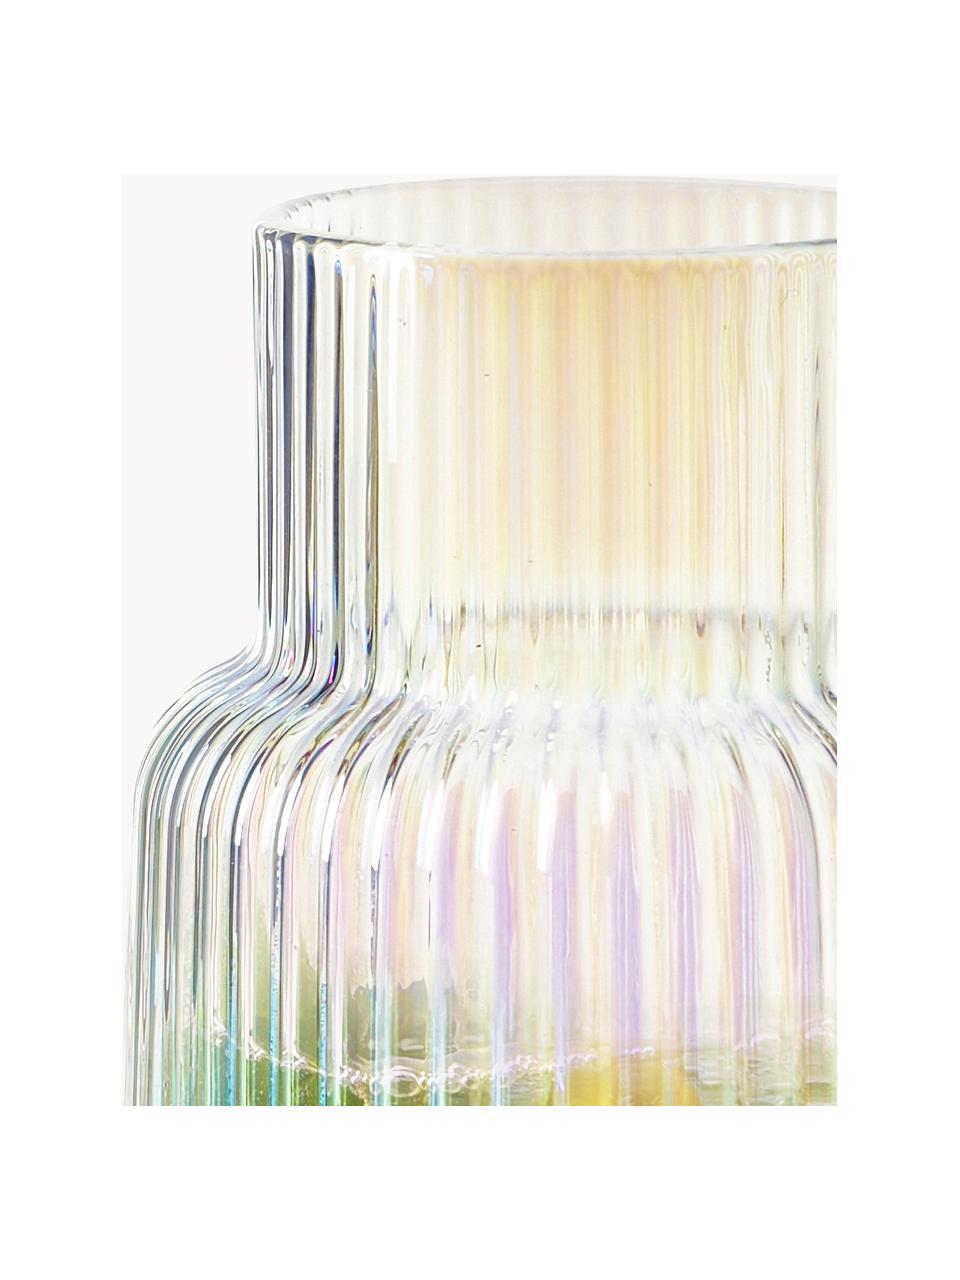 Carafe à eau en verre irisé et strié Minna de Guglielmo Scilla, 1